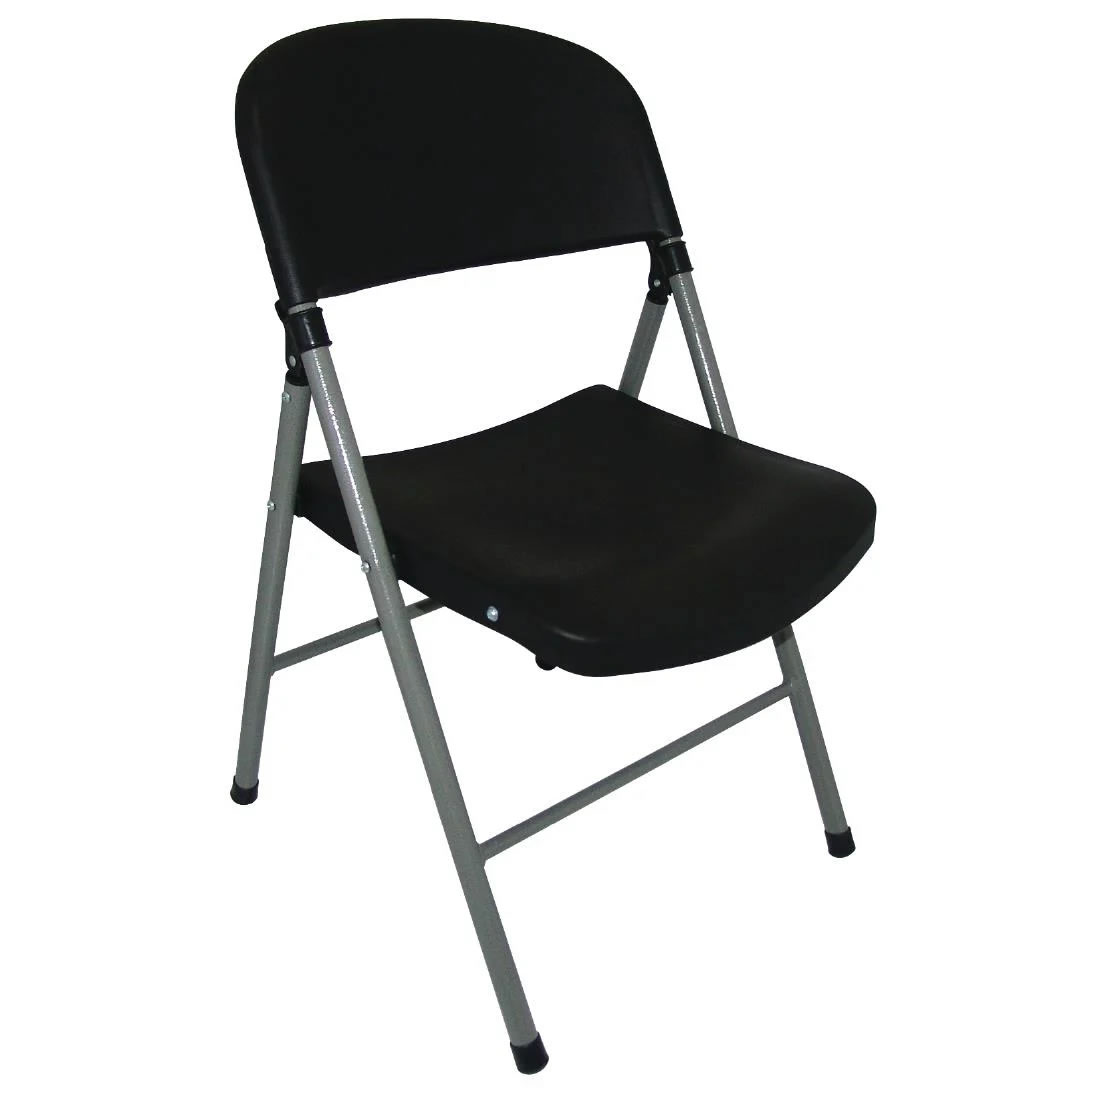 Alex Foldaway Steel Chair Indoor Or Outdoor Use - Black.